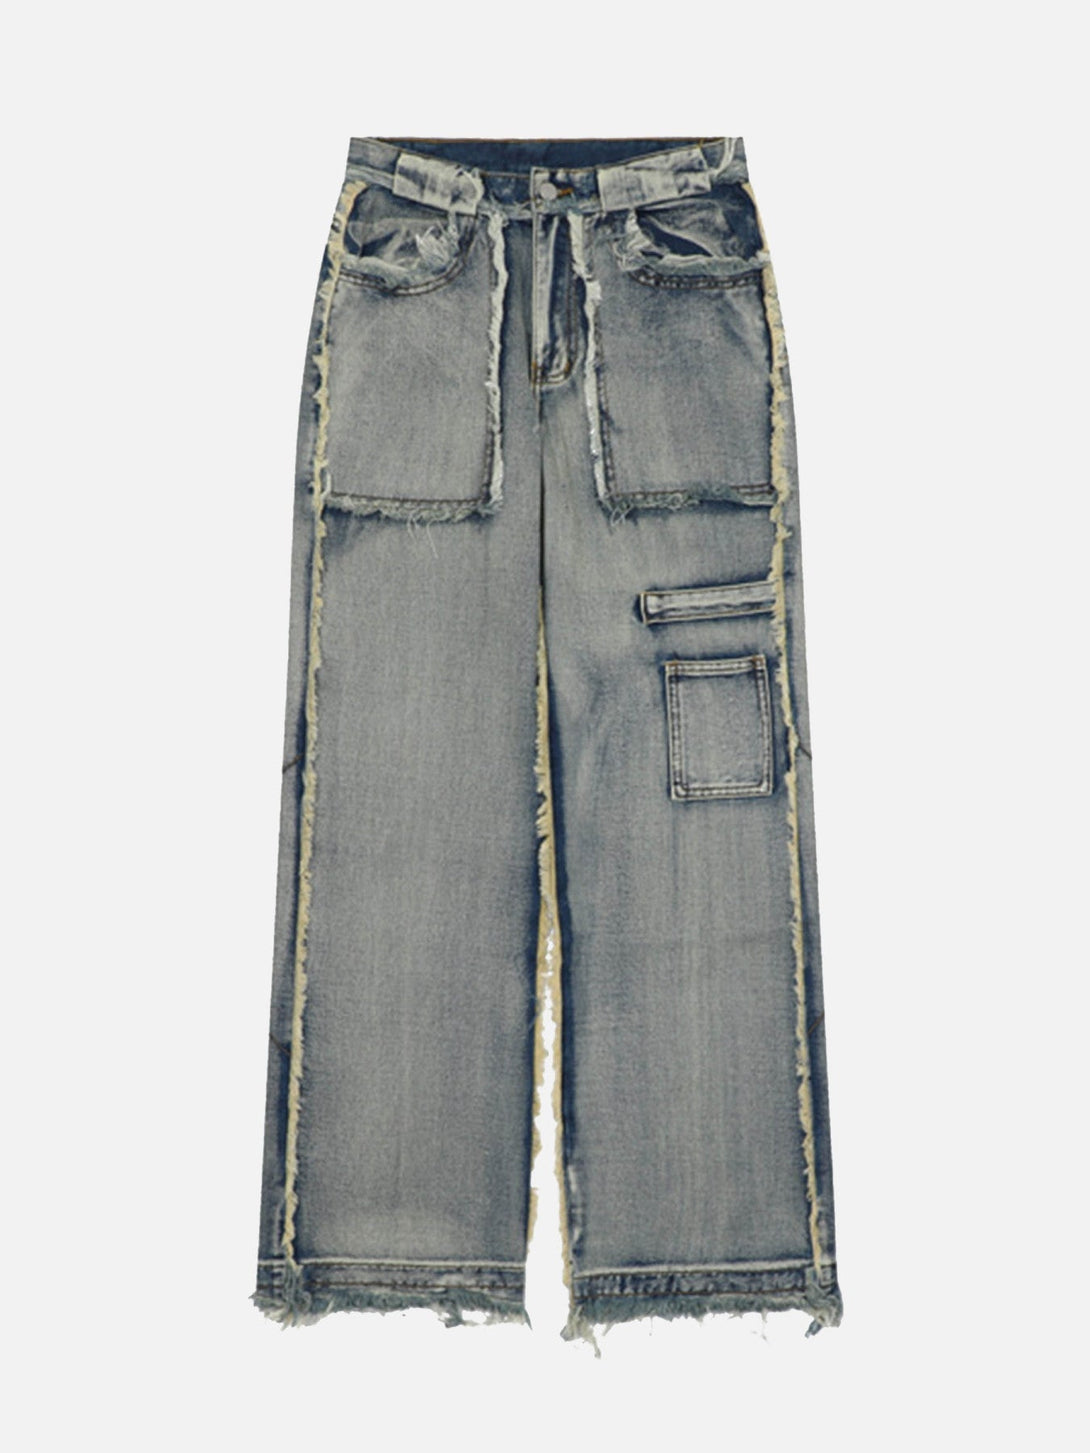 Majesda® - High Street Washed And Distressed Raw Edge Jeans- Outfit Ideas - Streetwear Fashion - majesda.com